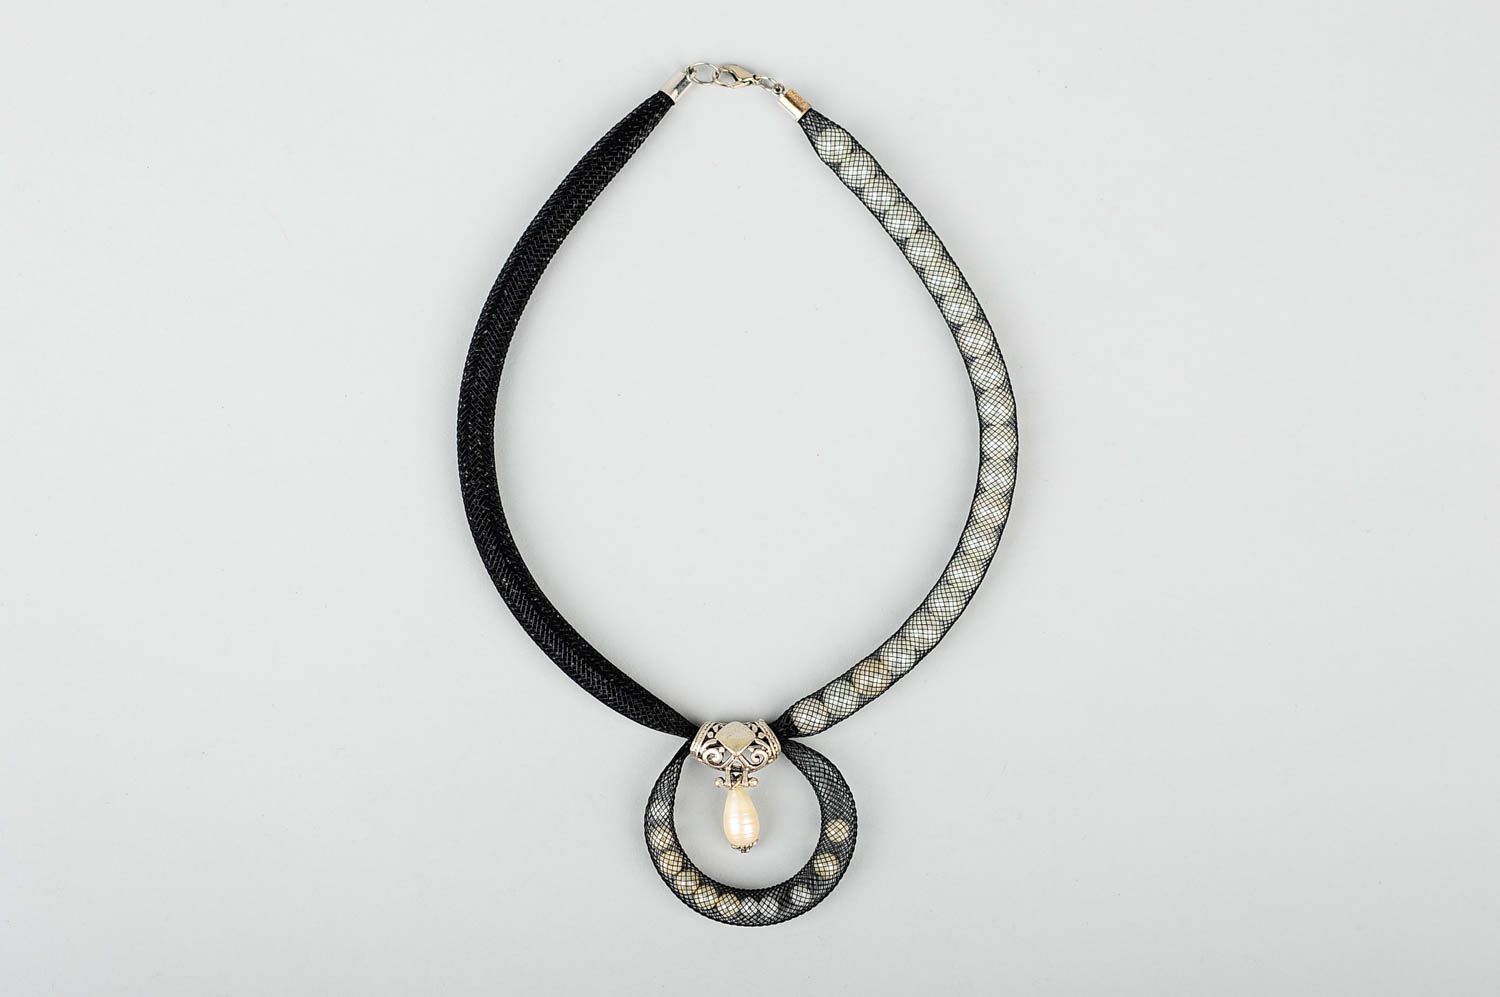 Stylish handmade beaded necklace artisan jewelry designs neck accessories photo 1